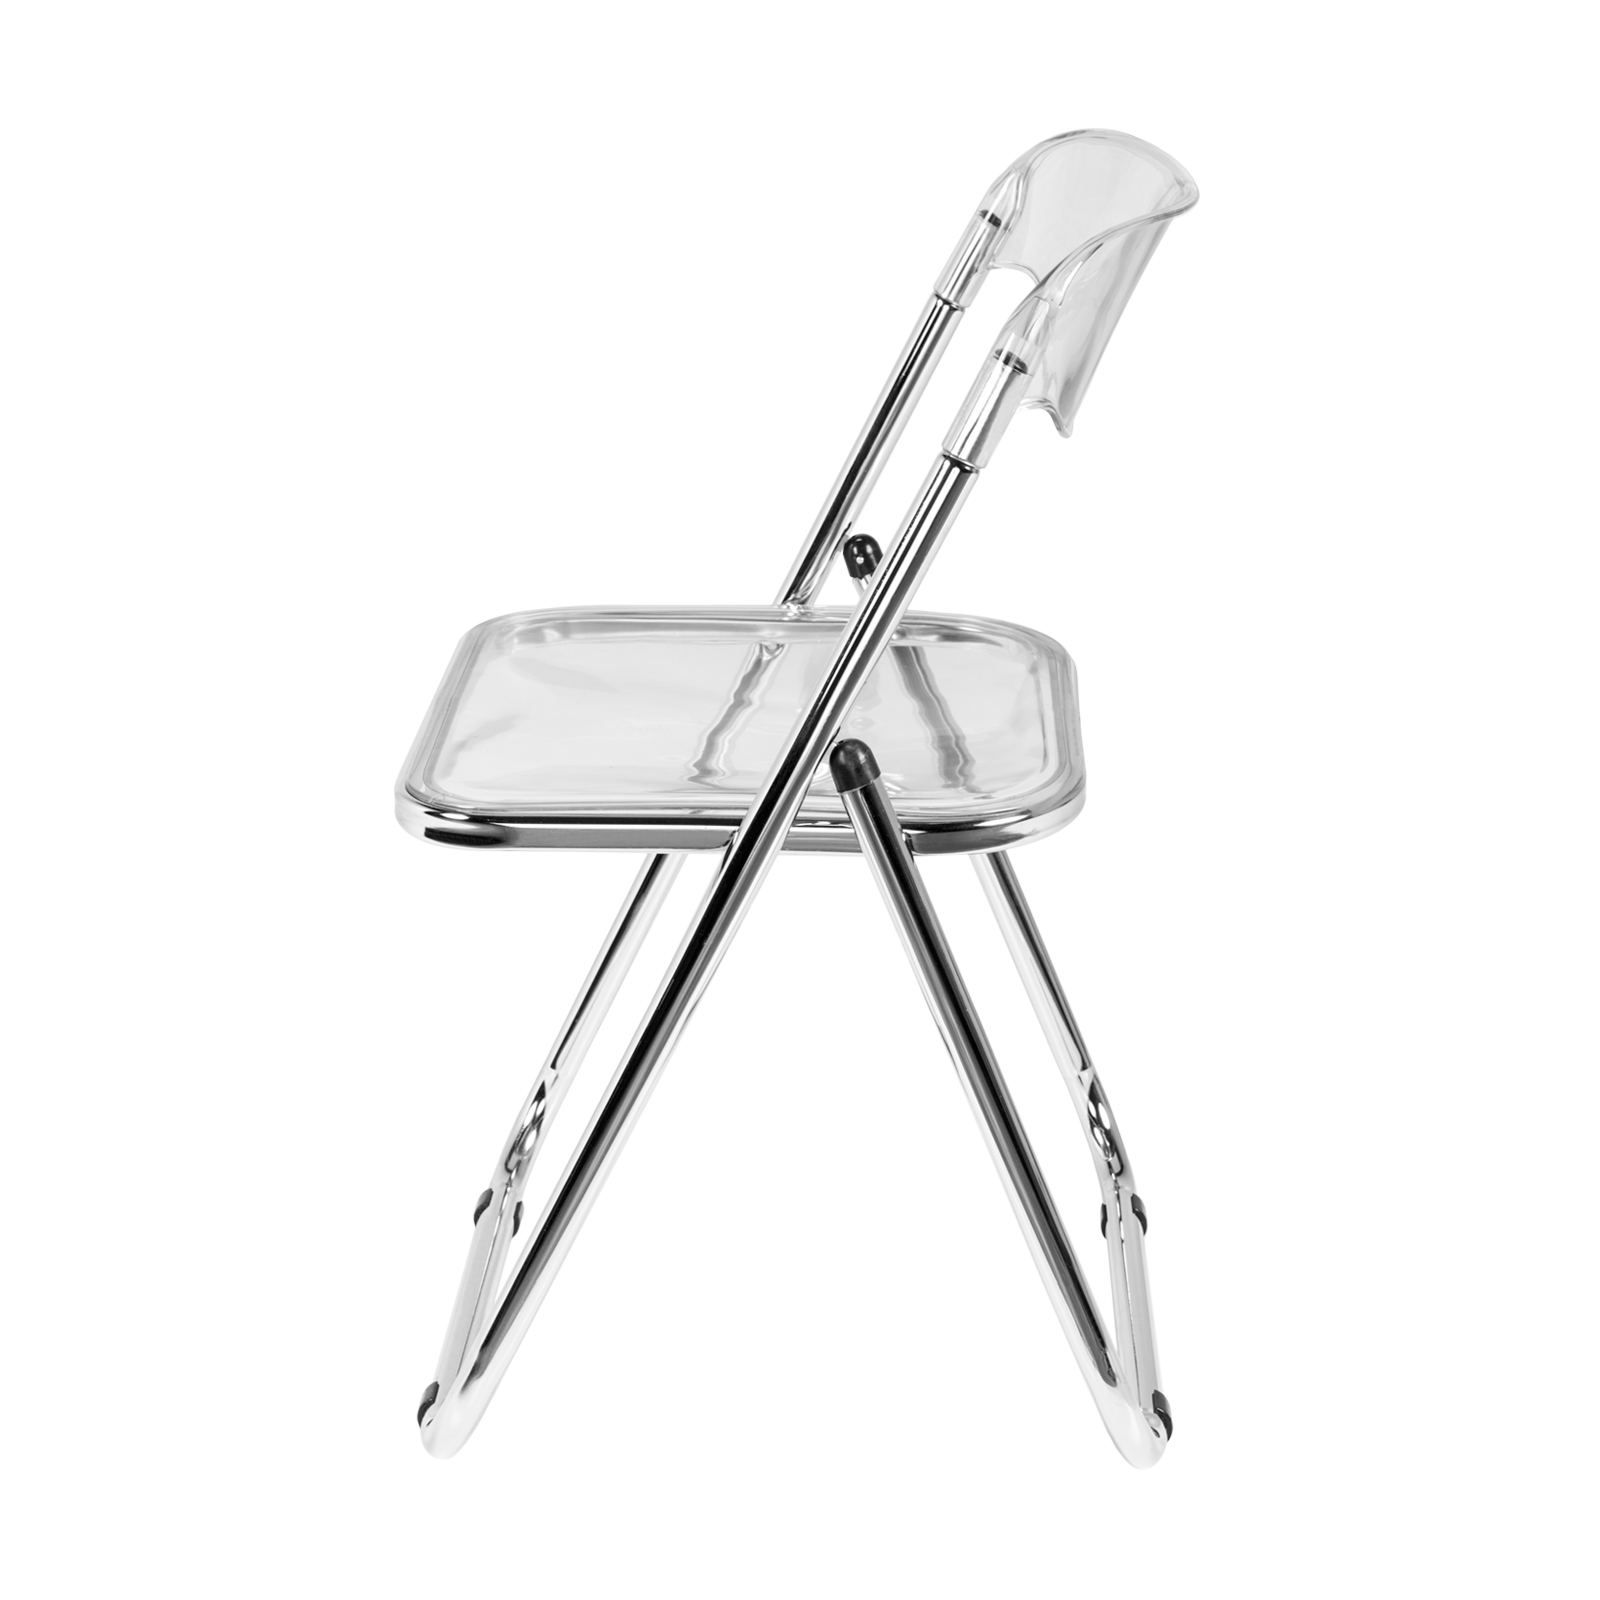 C10539 00 Lucite Folding Chair Rental Profile 